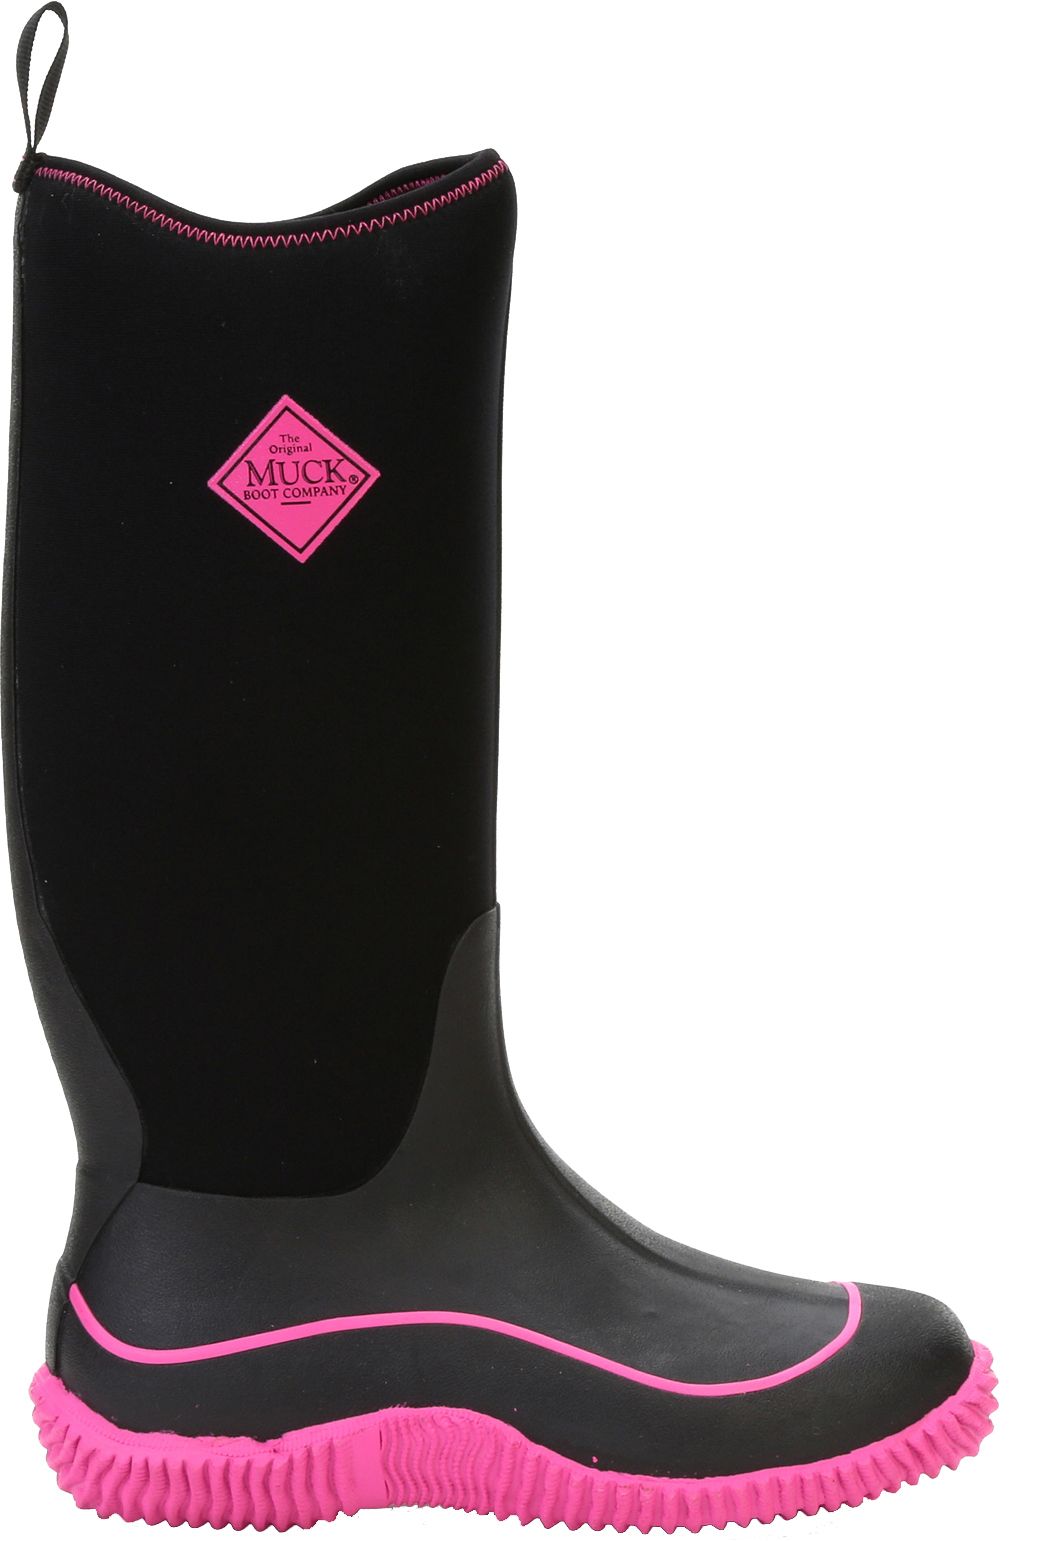 rain boot brands